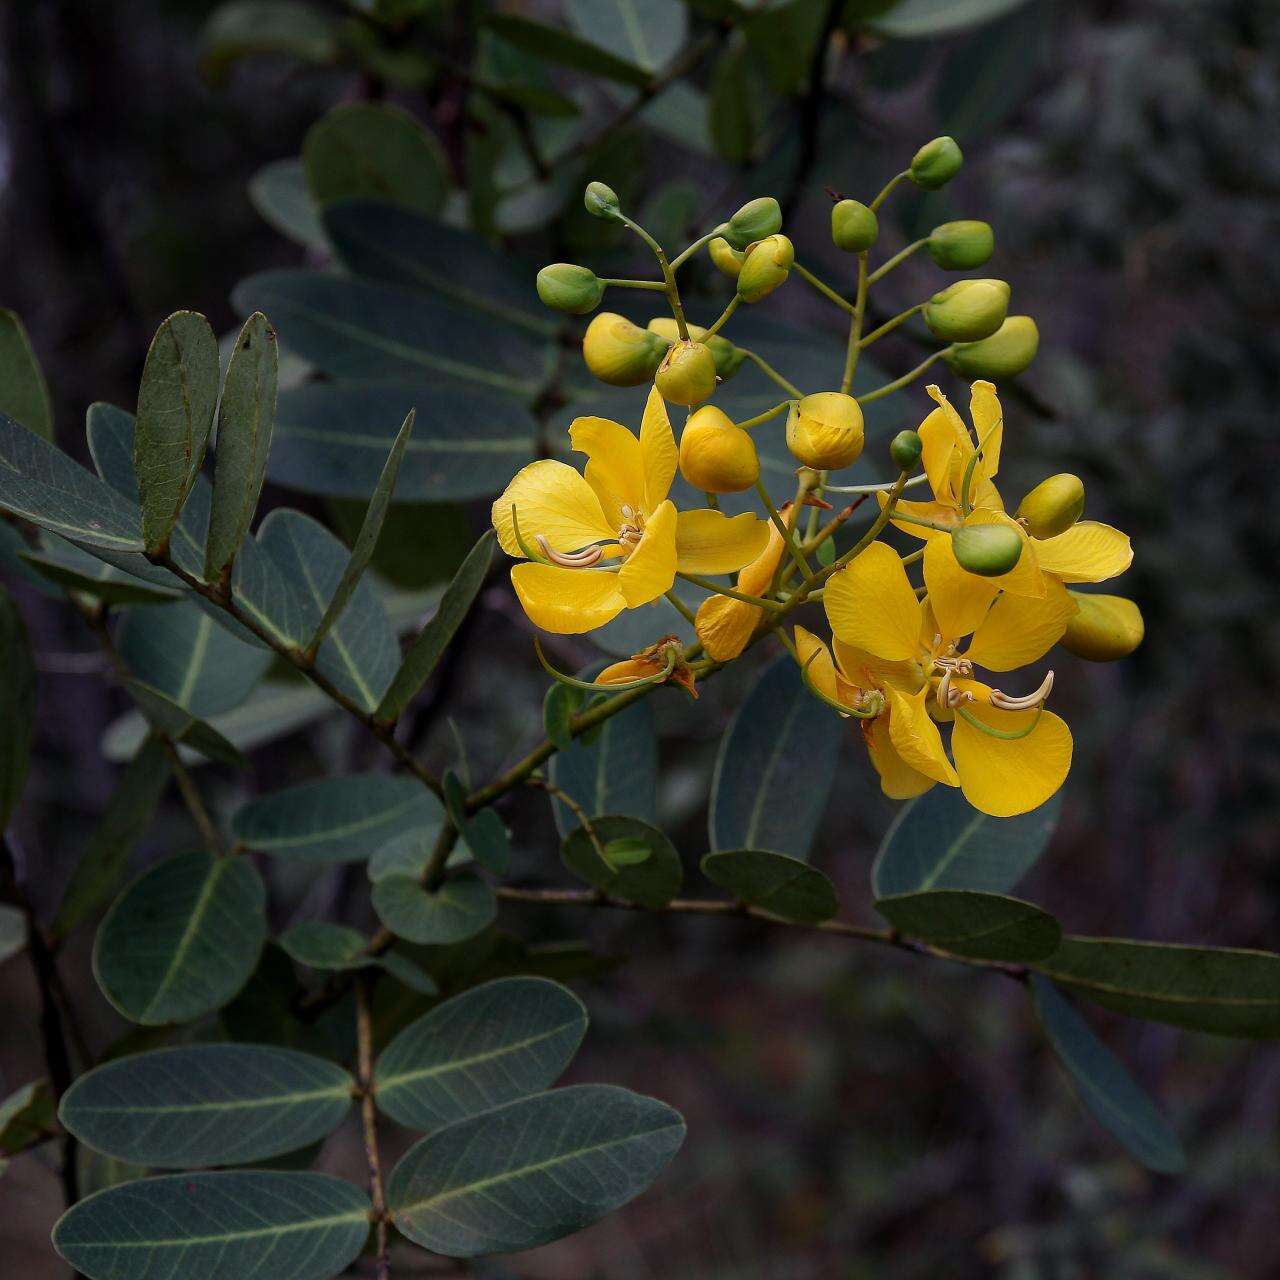 Image of Senna corifolia (Benth.) H. S. Irwin & Barneby